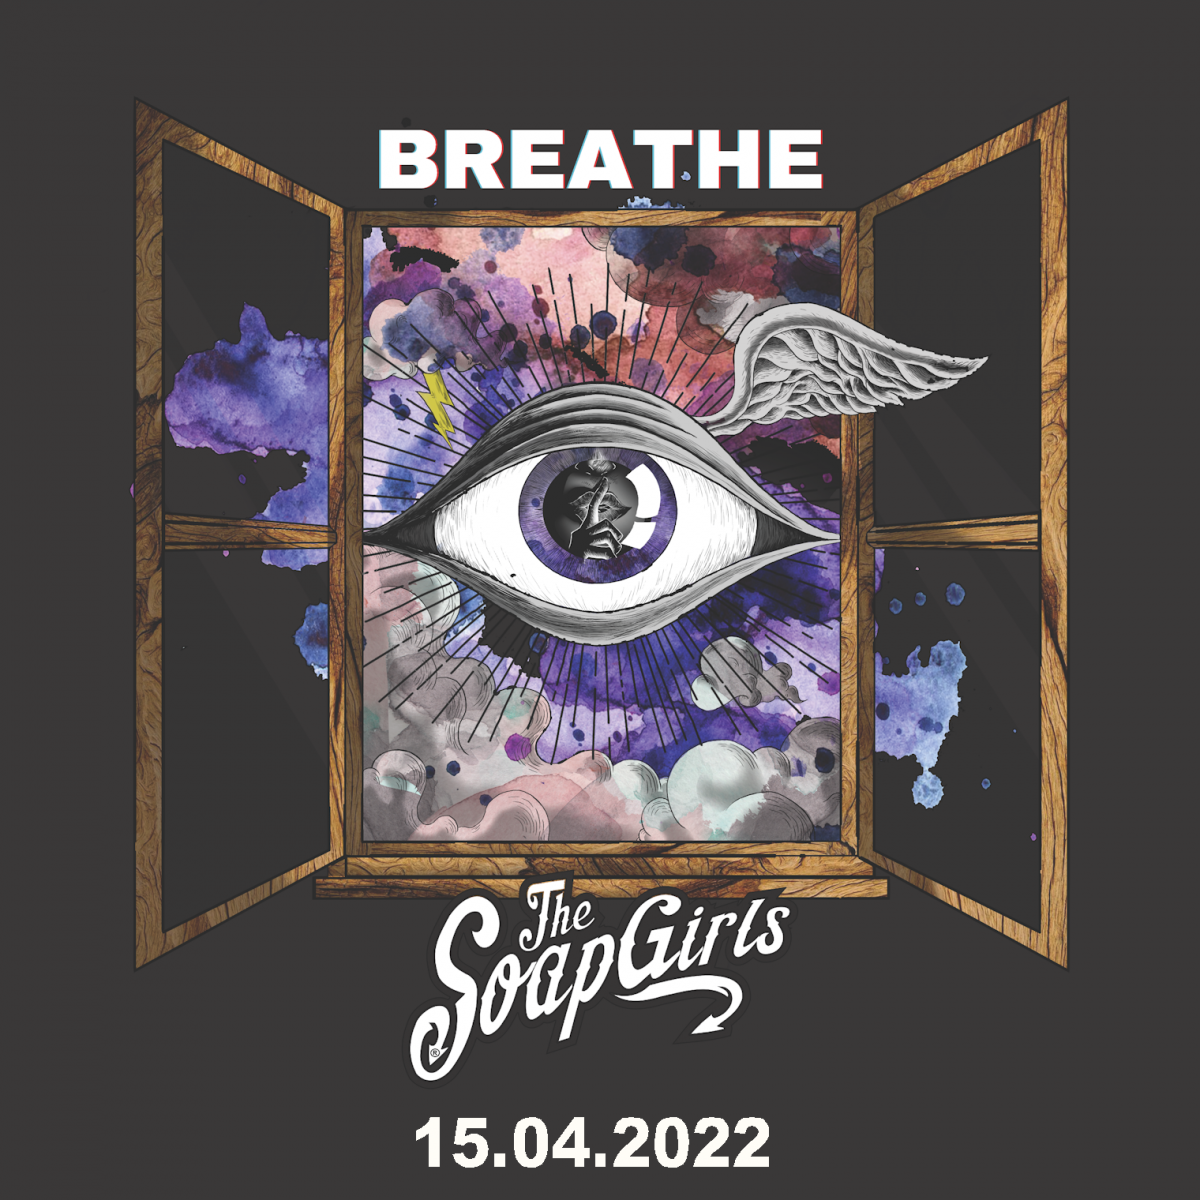 Breathe New Single Release The SoapGirls